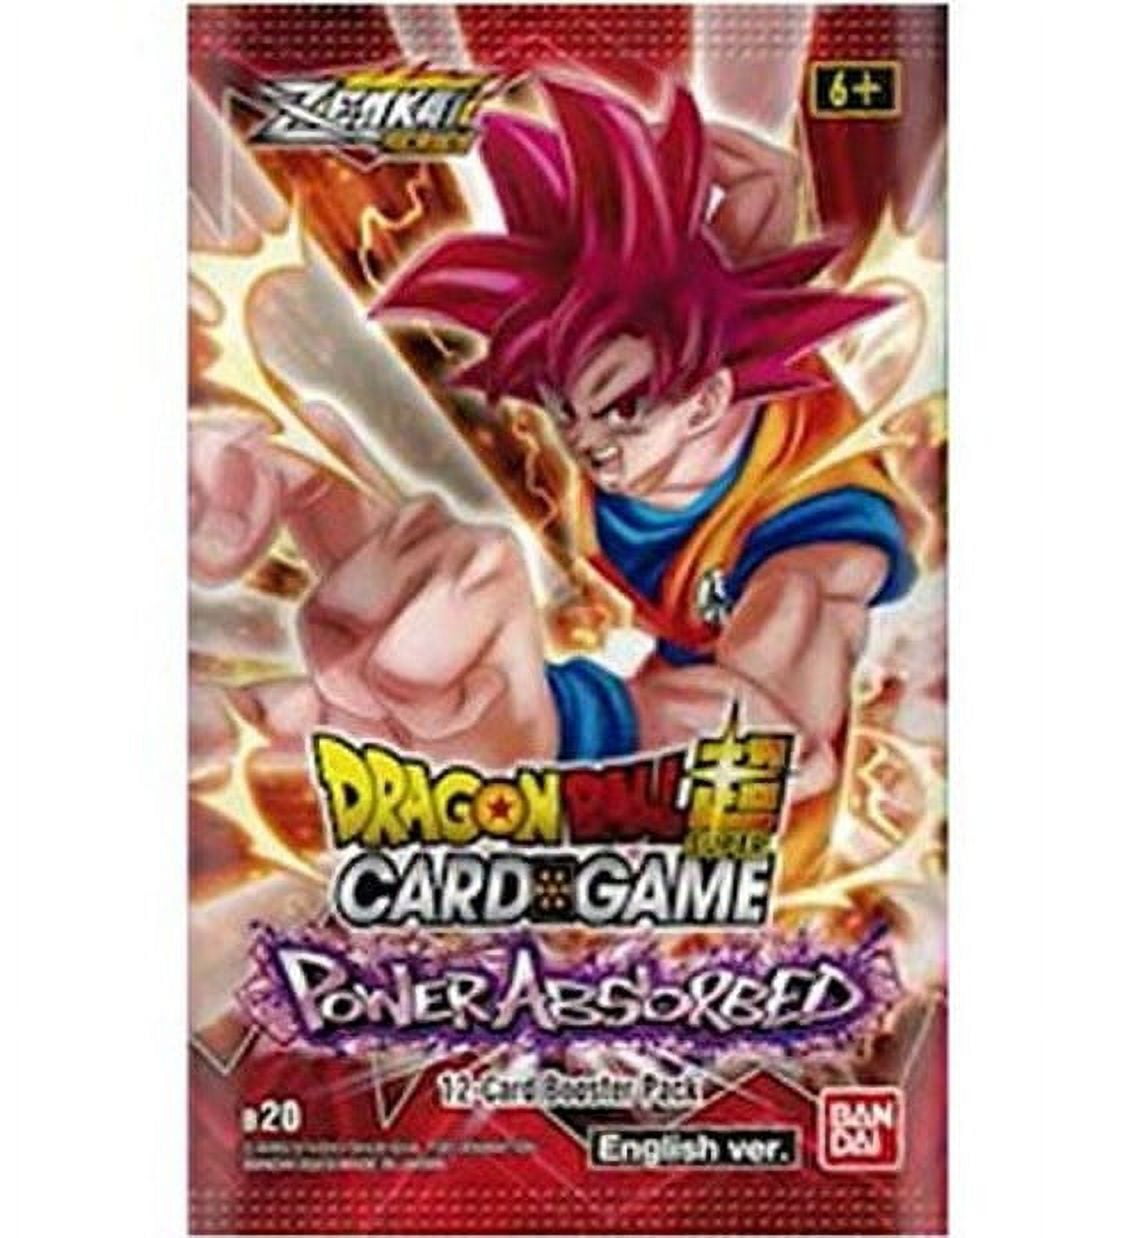 SUPER DRAGONBALL HEROES Card Game - Dragon Ball - Collectible Card